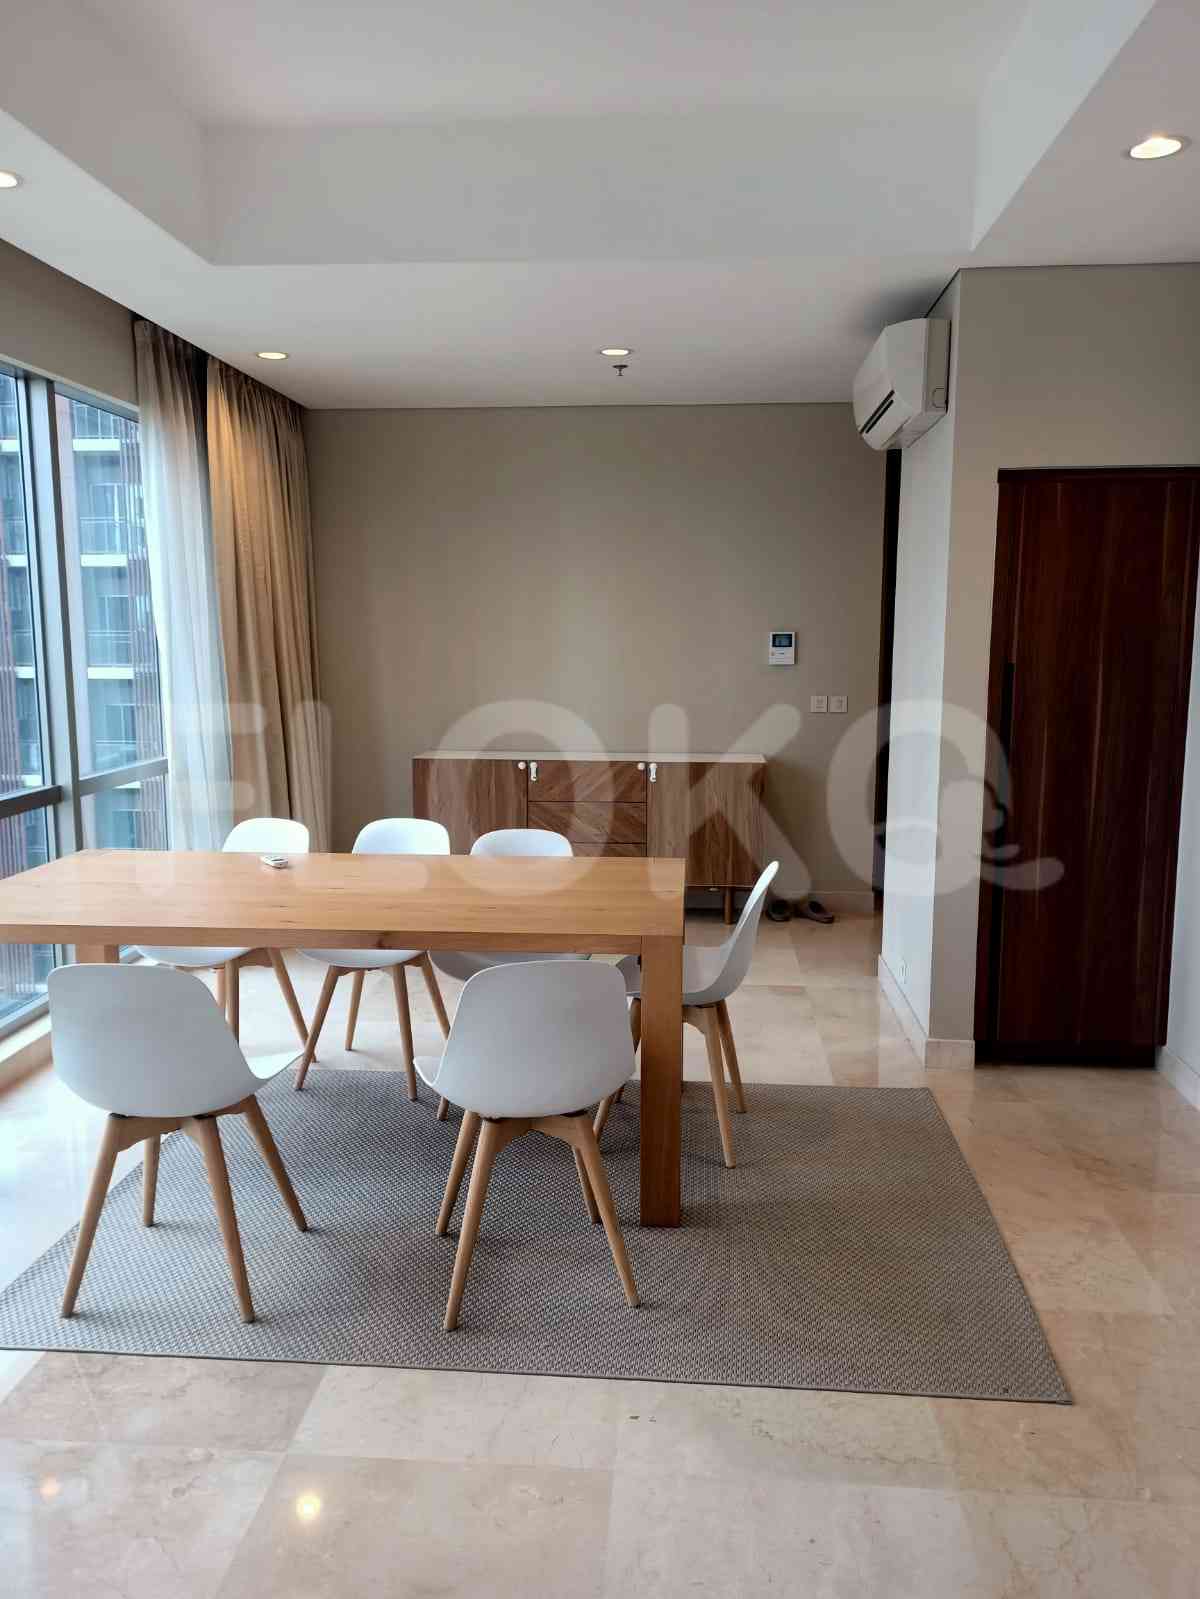 3 Bedroom on 7th Floor for Rent in Apartemen Branz Simatupang - ftb893 1